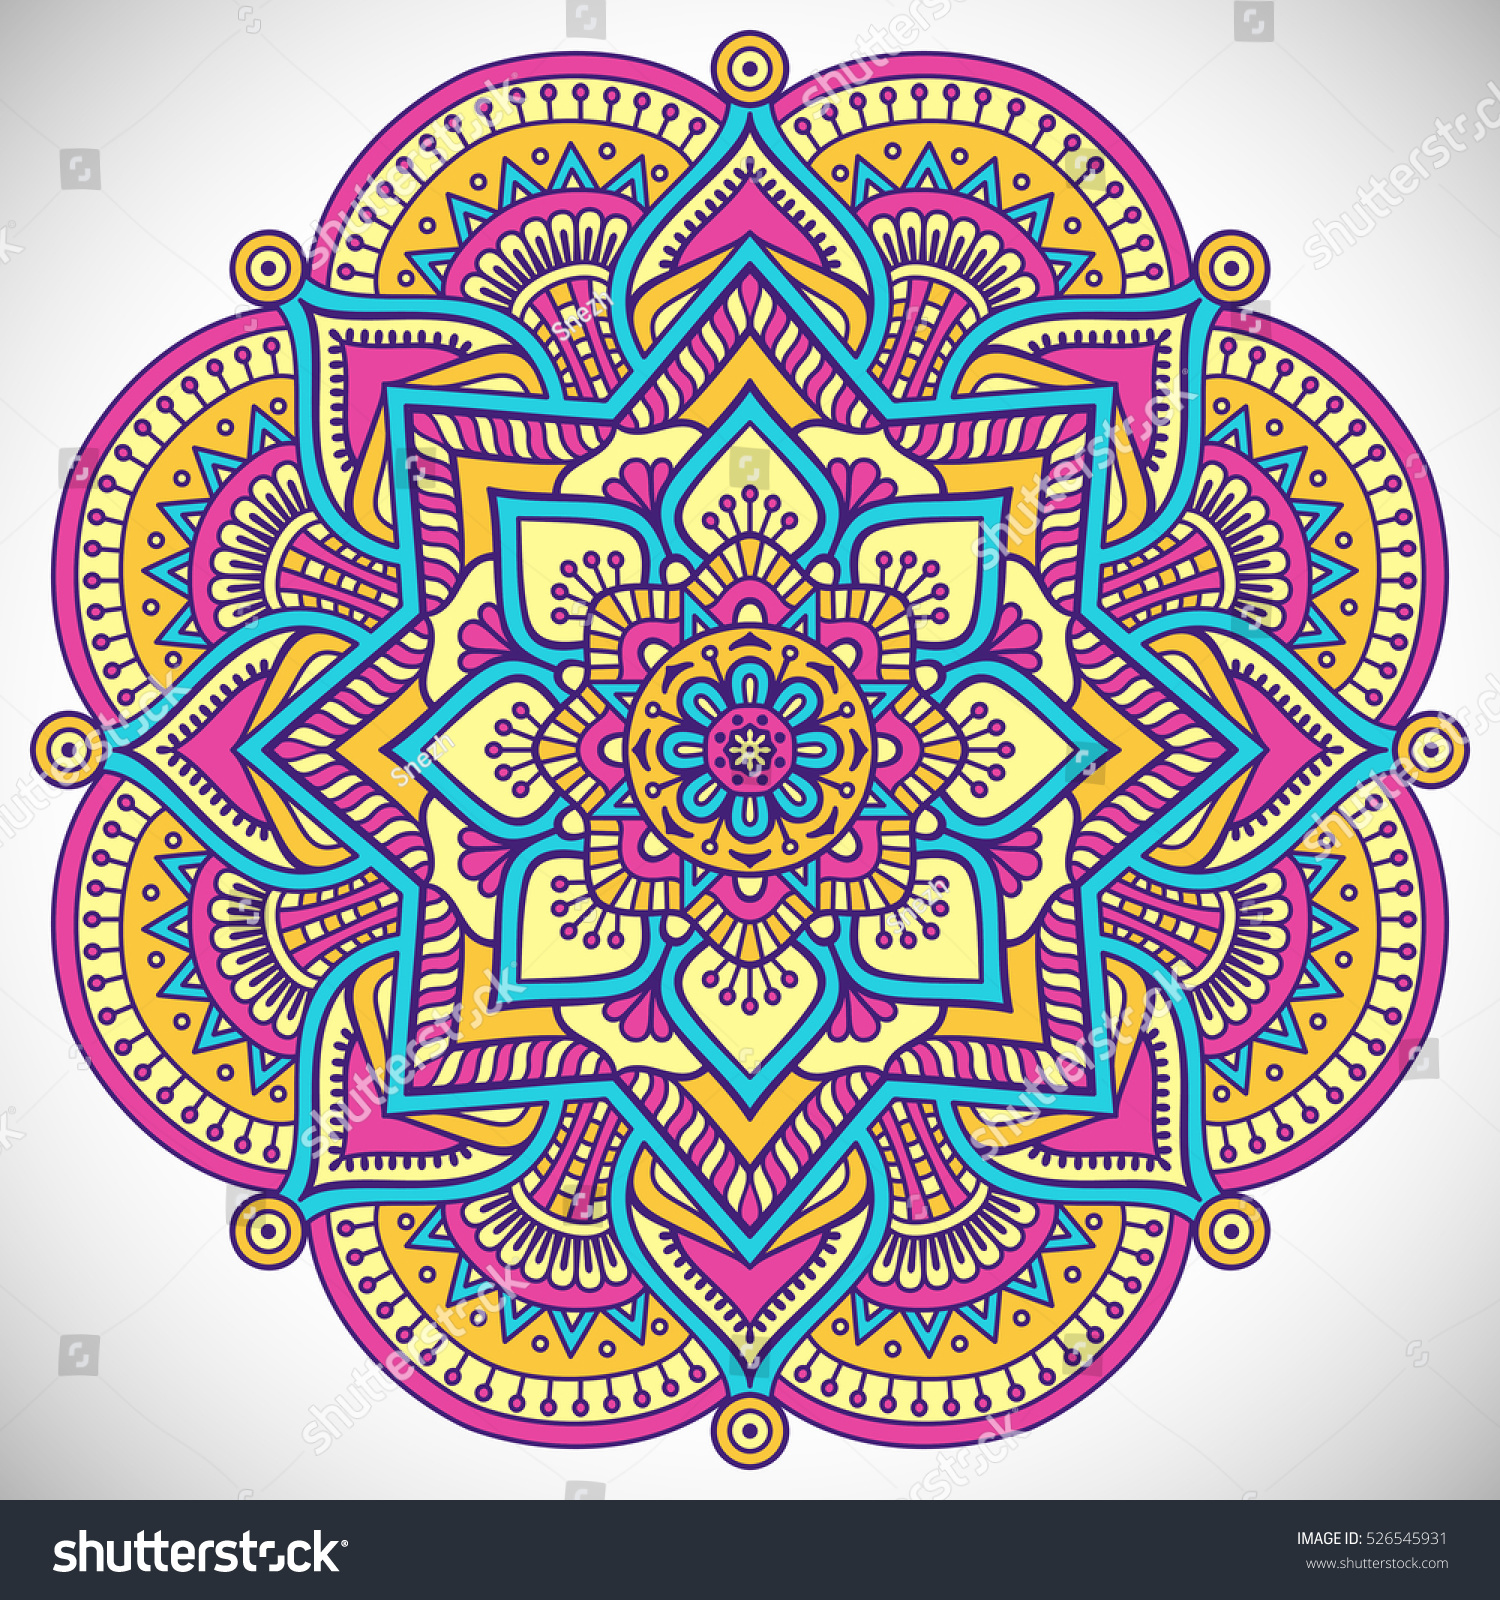 Download Vector Indian Mandala - 526545931 : Shutterstock